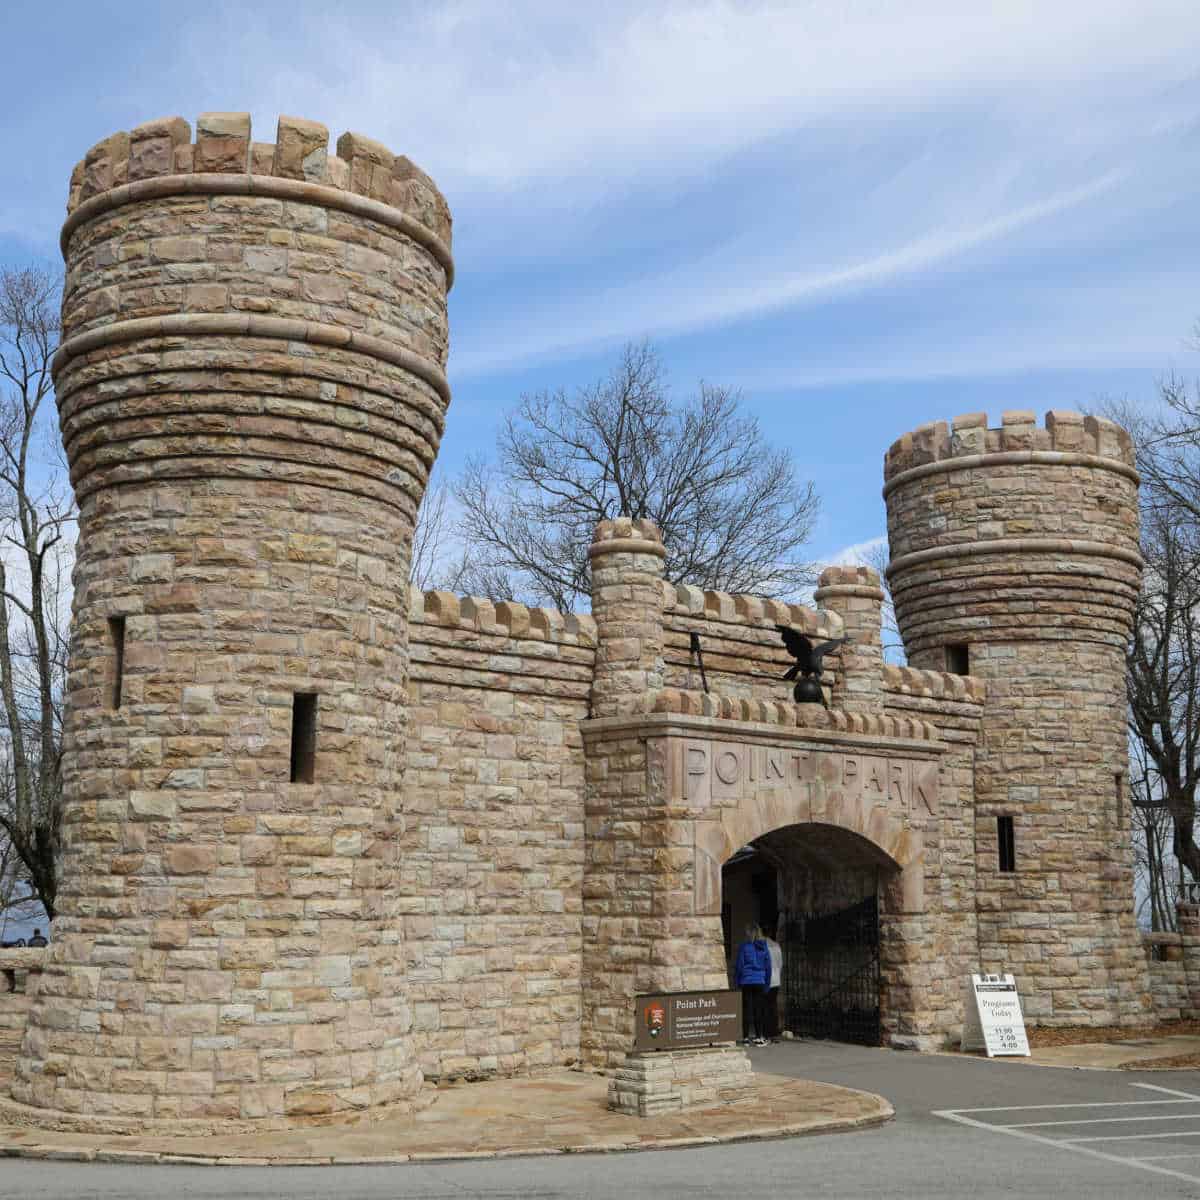 Point Park castle with a National Park Service Sign